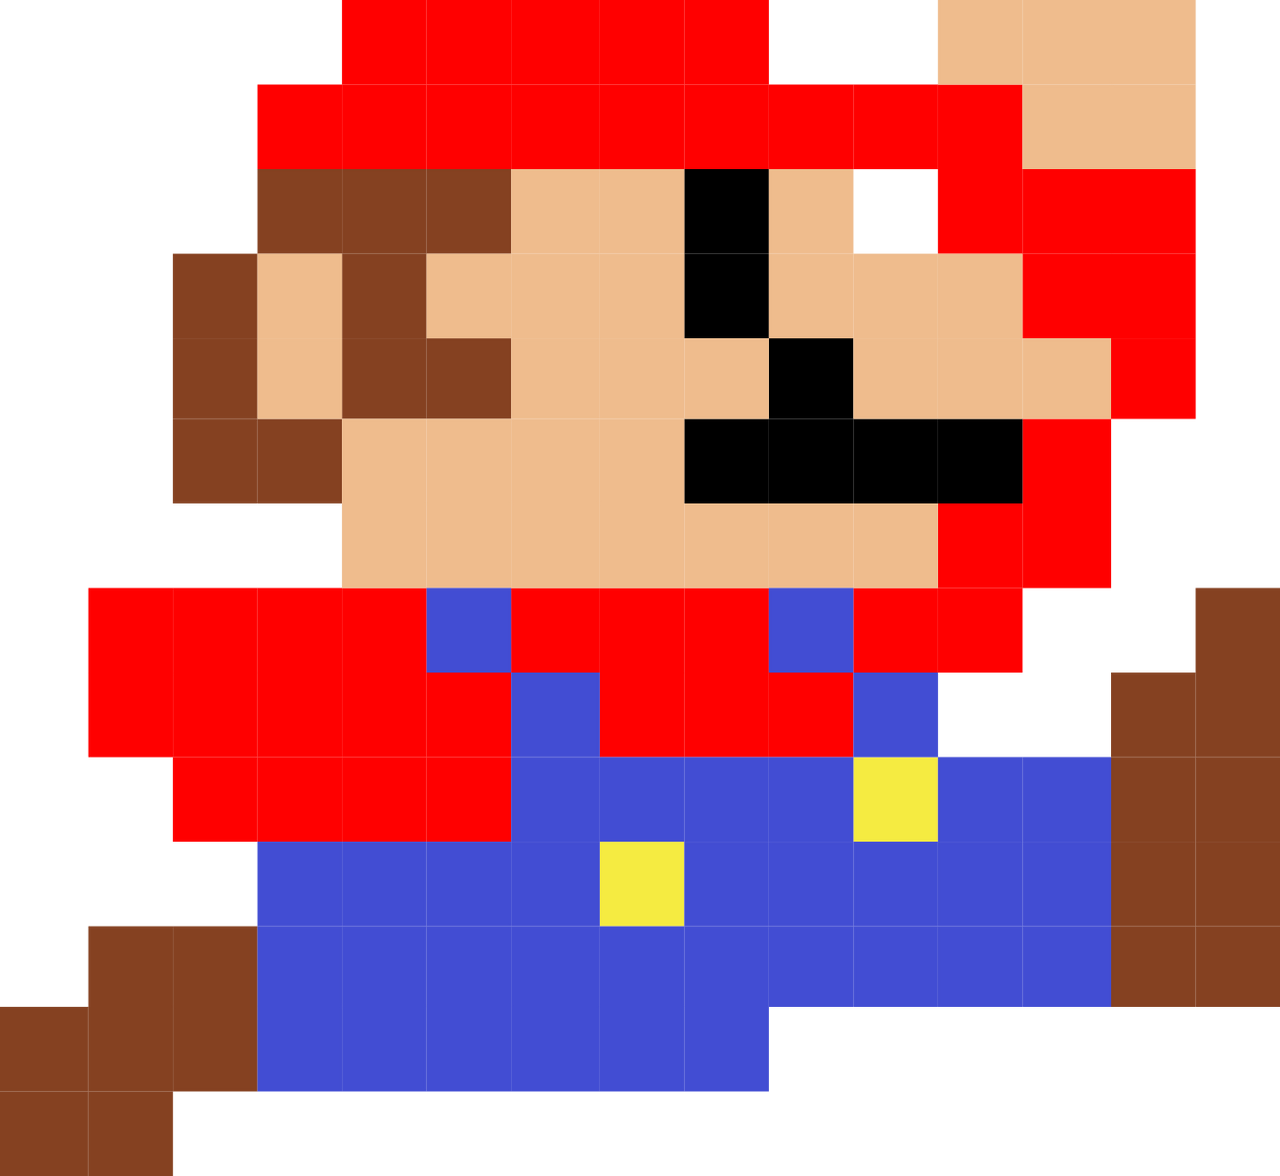 Super Mario Pixel Art Template